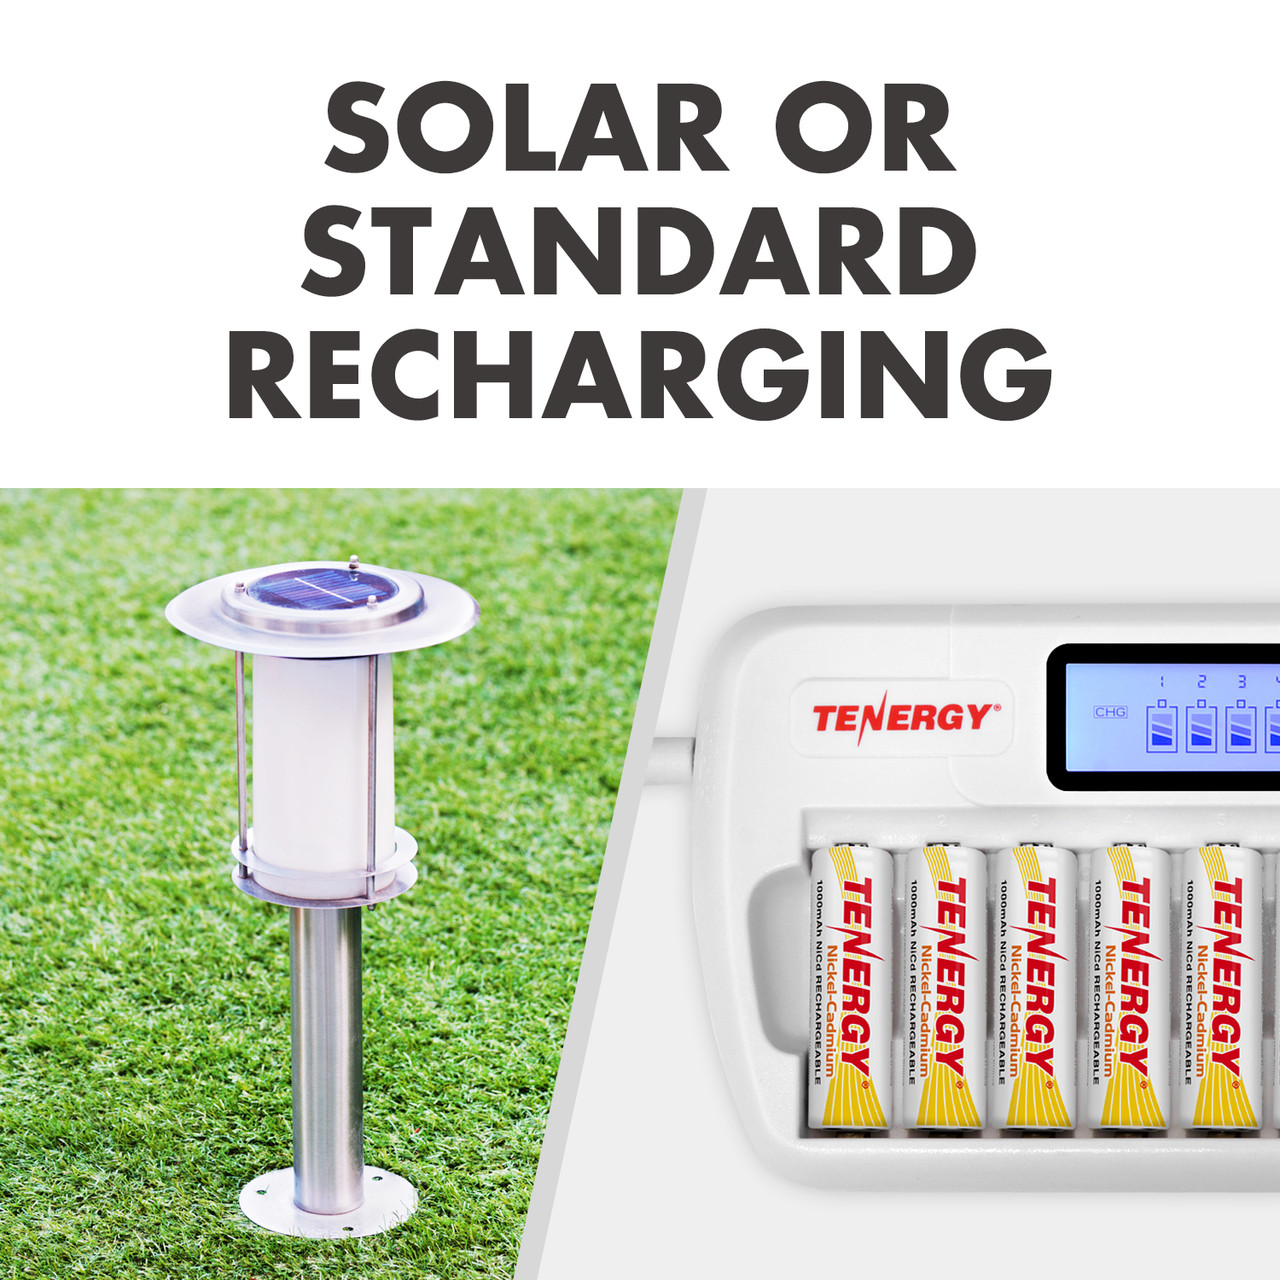 Tenergy NiCD AA 1.2V 1000mAh Rechargeable Battery, 24 pack, for Solar/Garden Lights